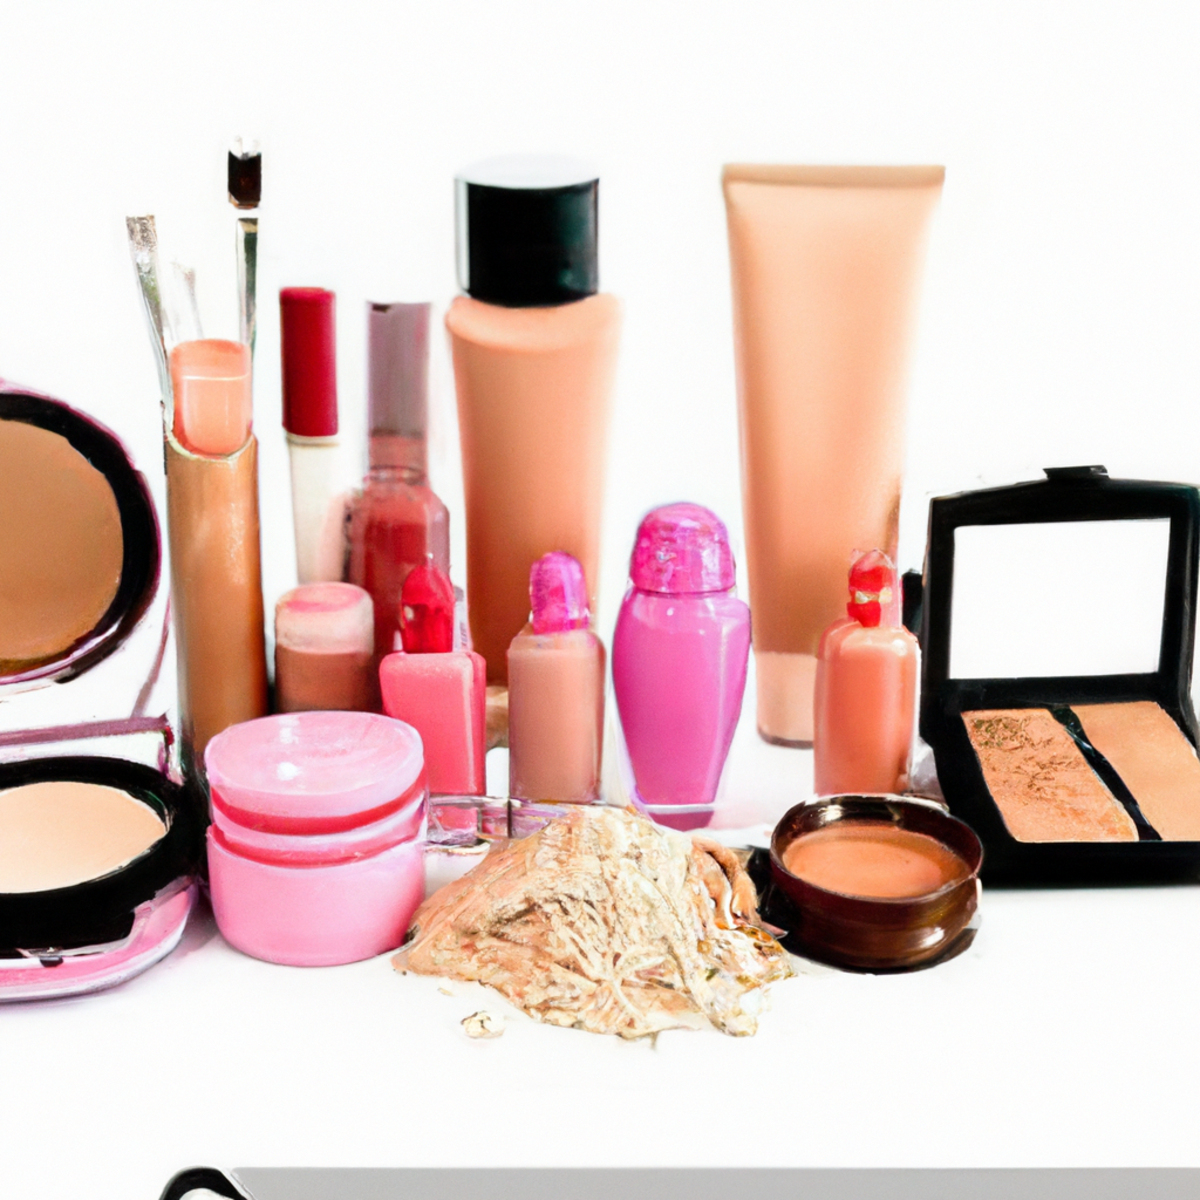 Makeup products for sensitive skin: foundation bottles, brush, pastel backdrop. Helpful guide for individuals with sensitive skin -Rosacea management